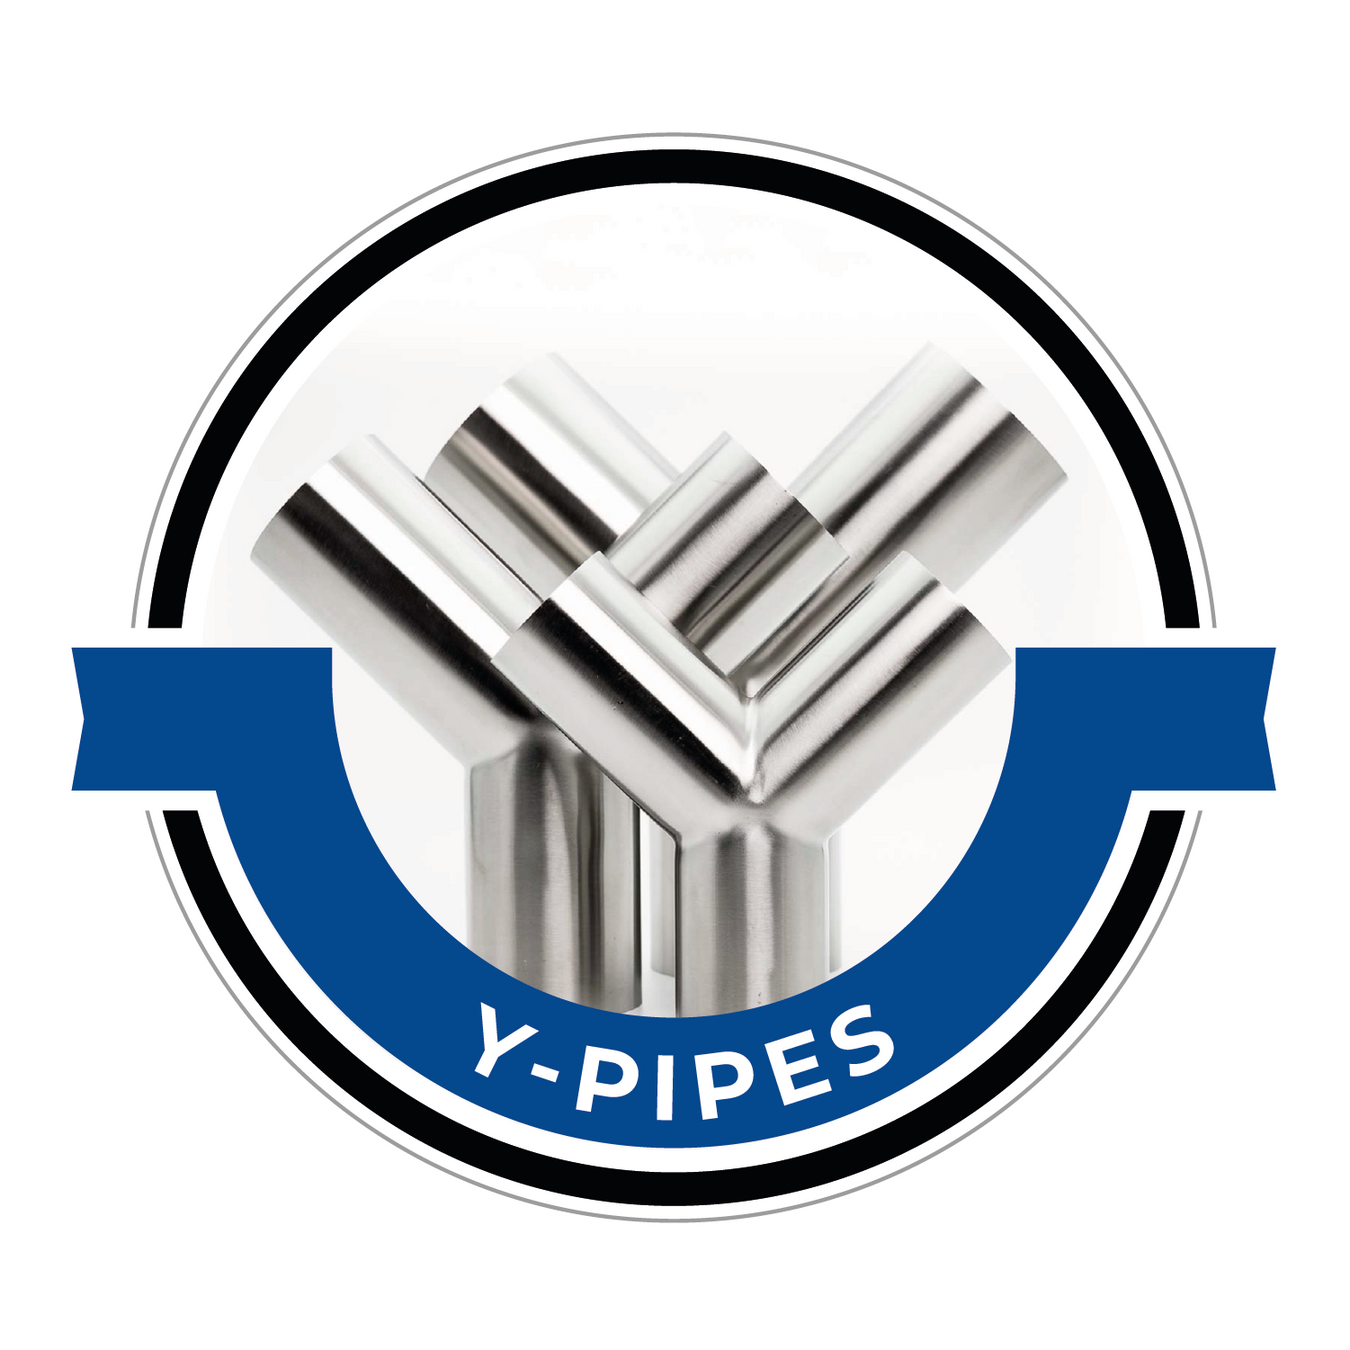 Y-Pipes